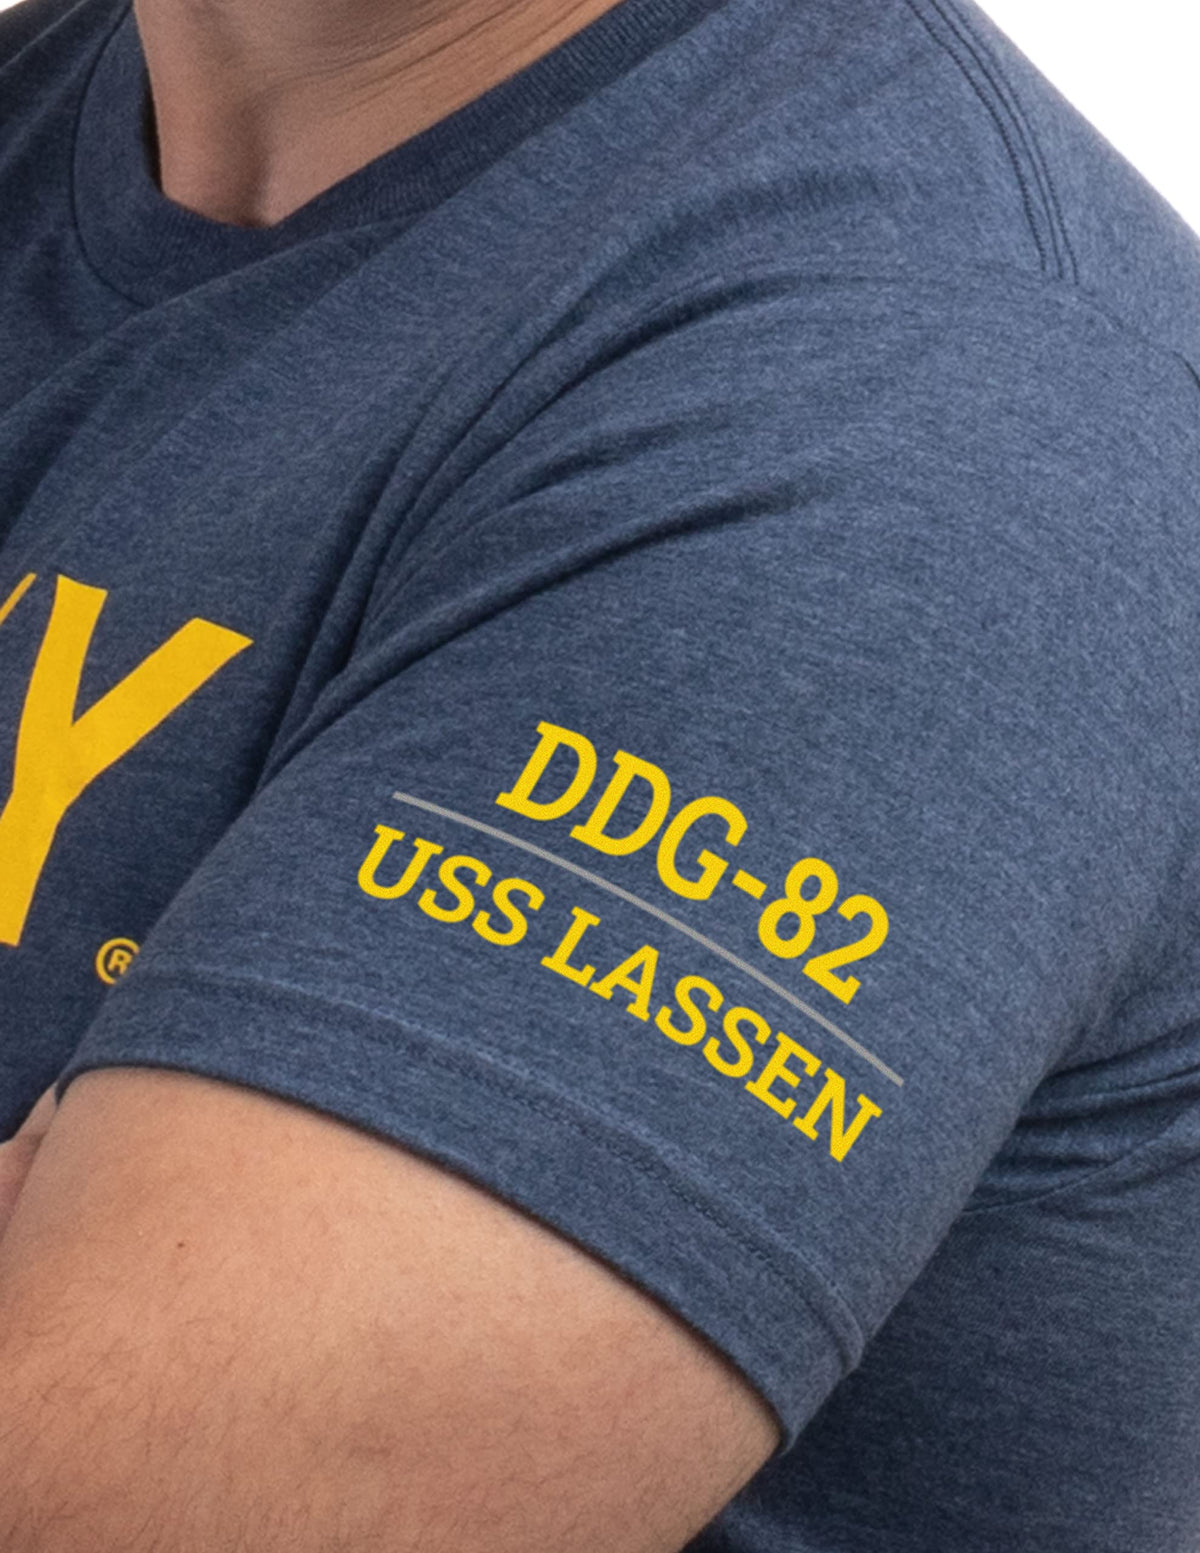 USS Lassen, DDG-82 | U.S. Navy Sailor Veteran USN United States Naval T-shirt for Men Women